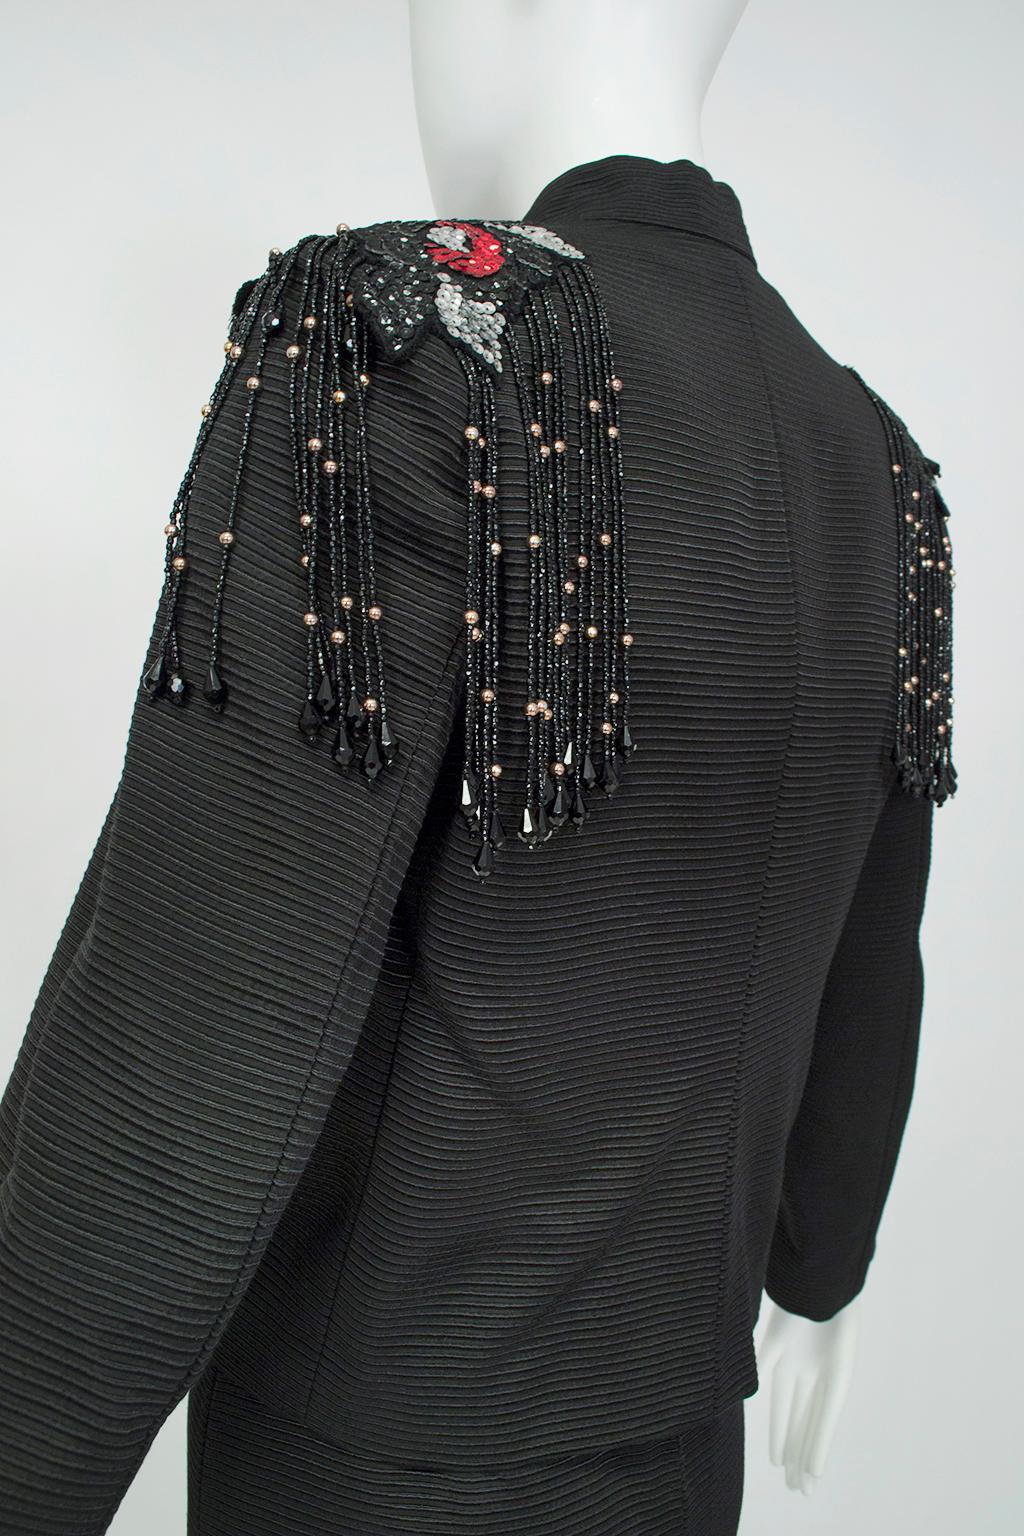 Emilio Schuberth Extravagant Black Fringe Shoulder Dress Suit - M, 1960s For Sale 3